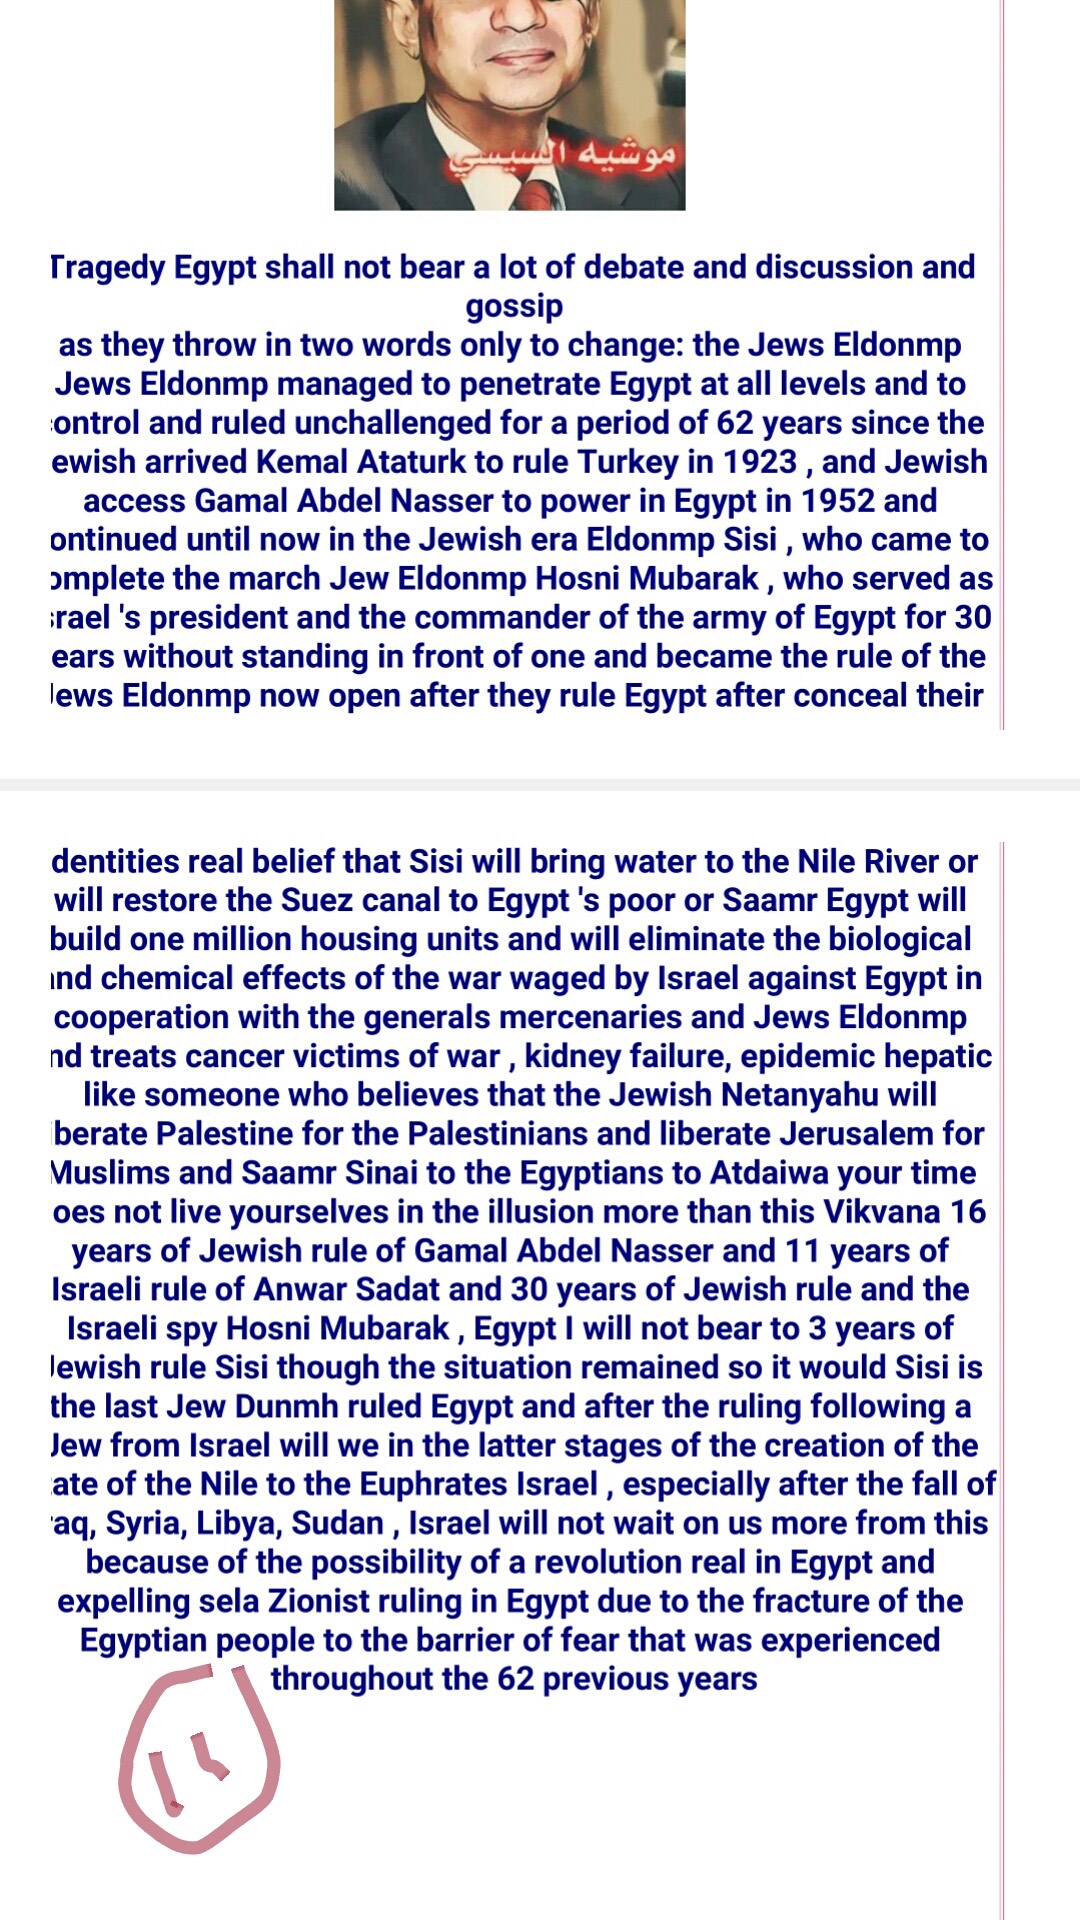 The Islamic brotherhood struggle with Israel, Egypt, Syria